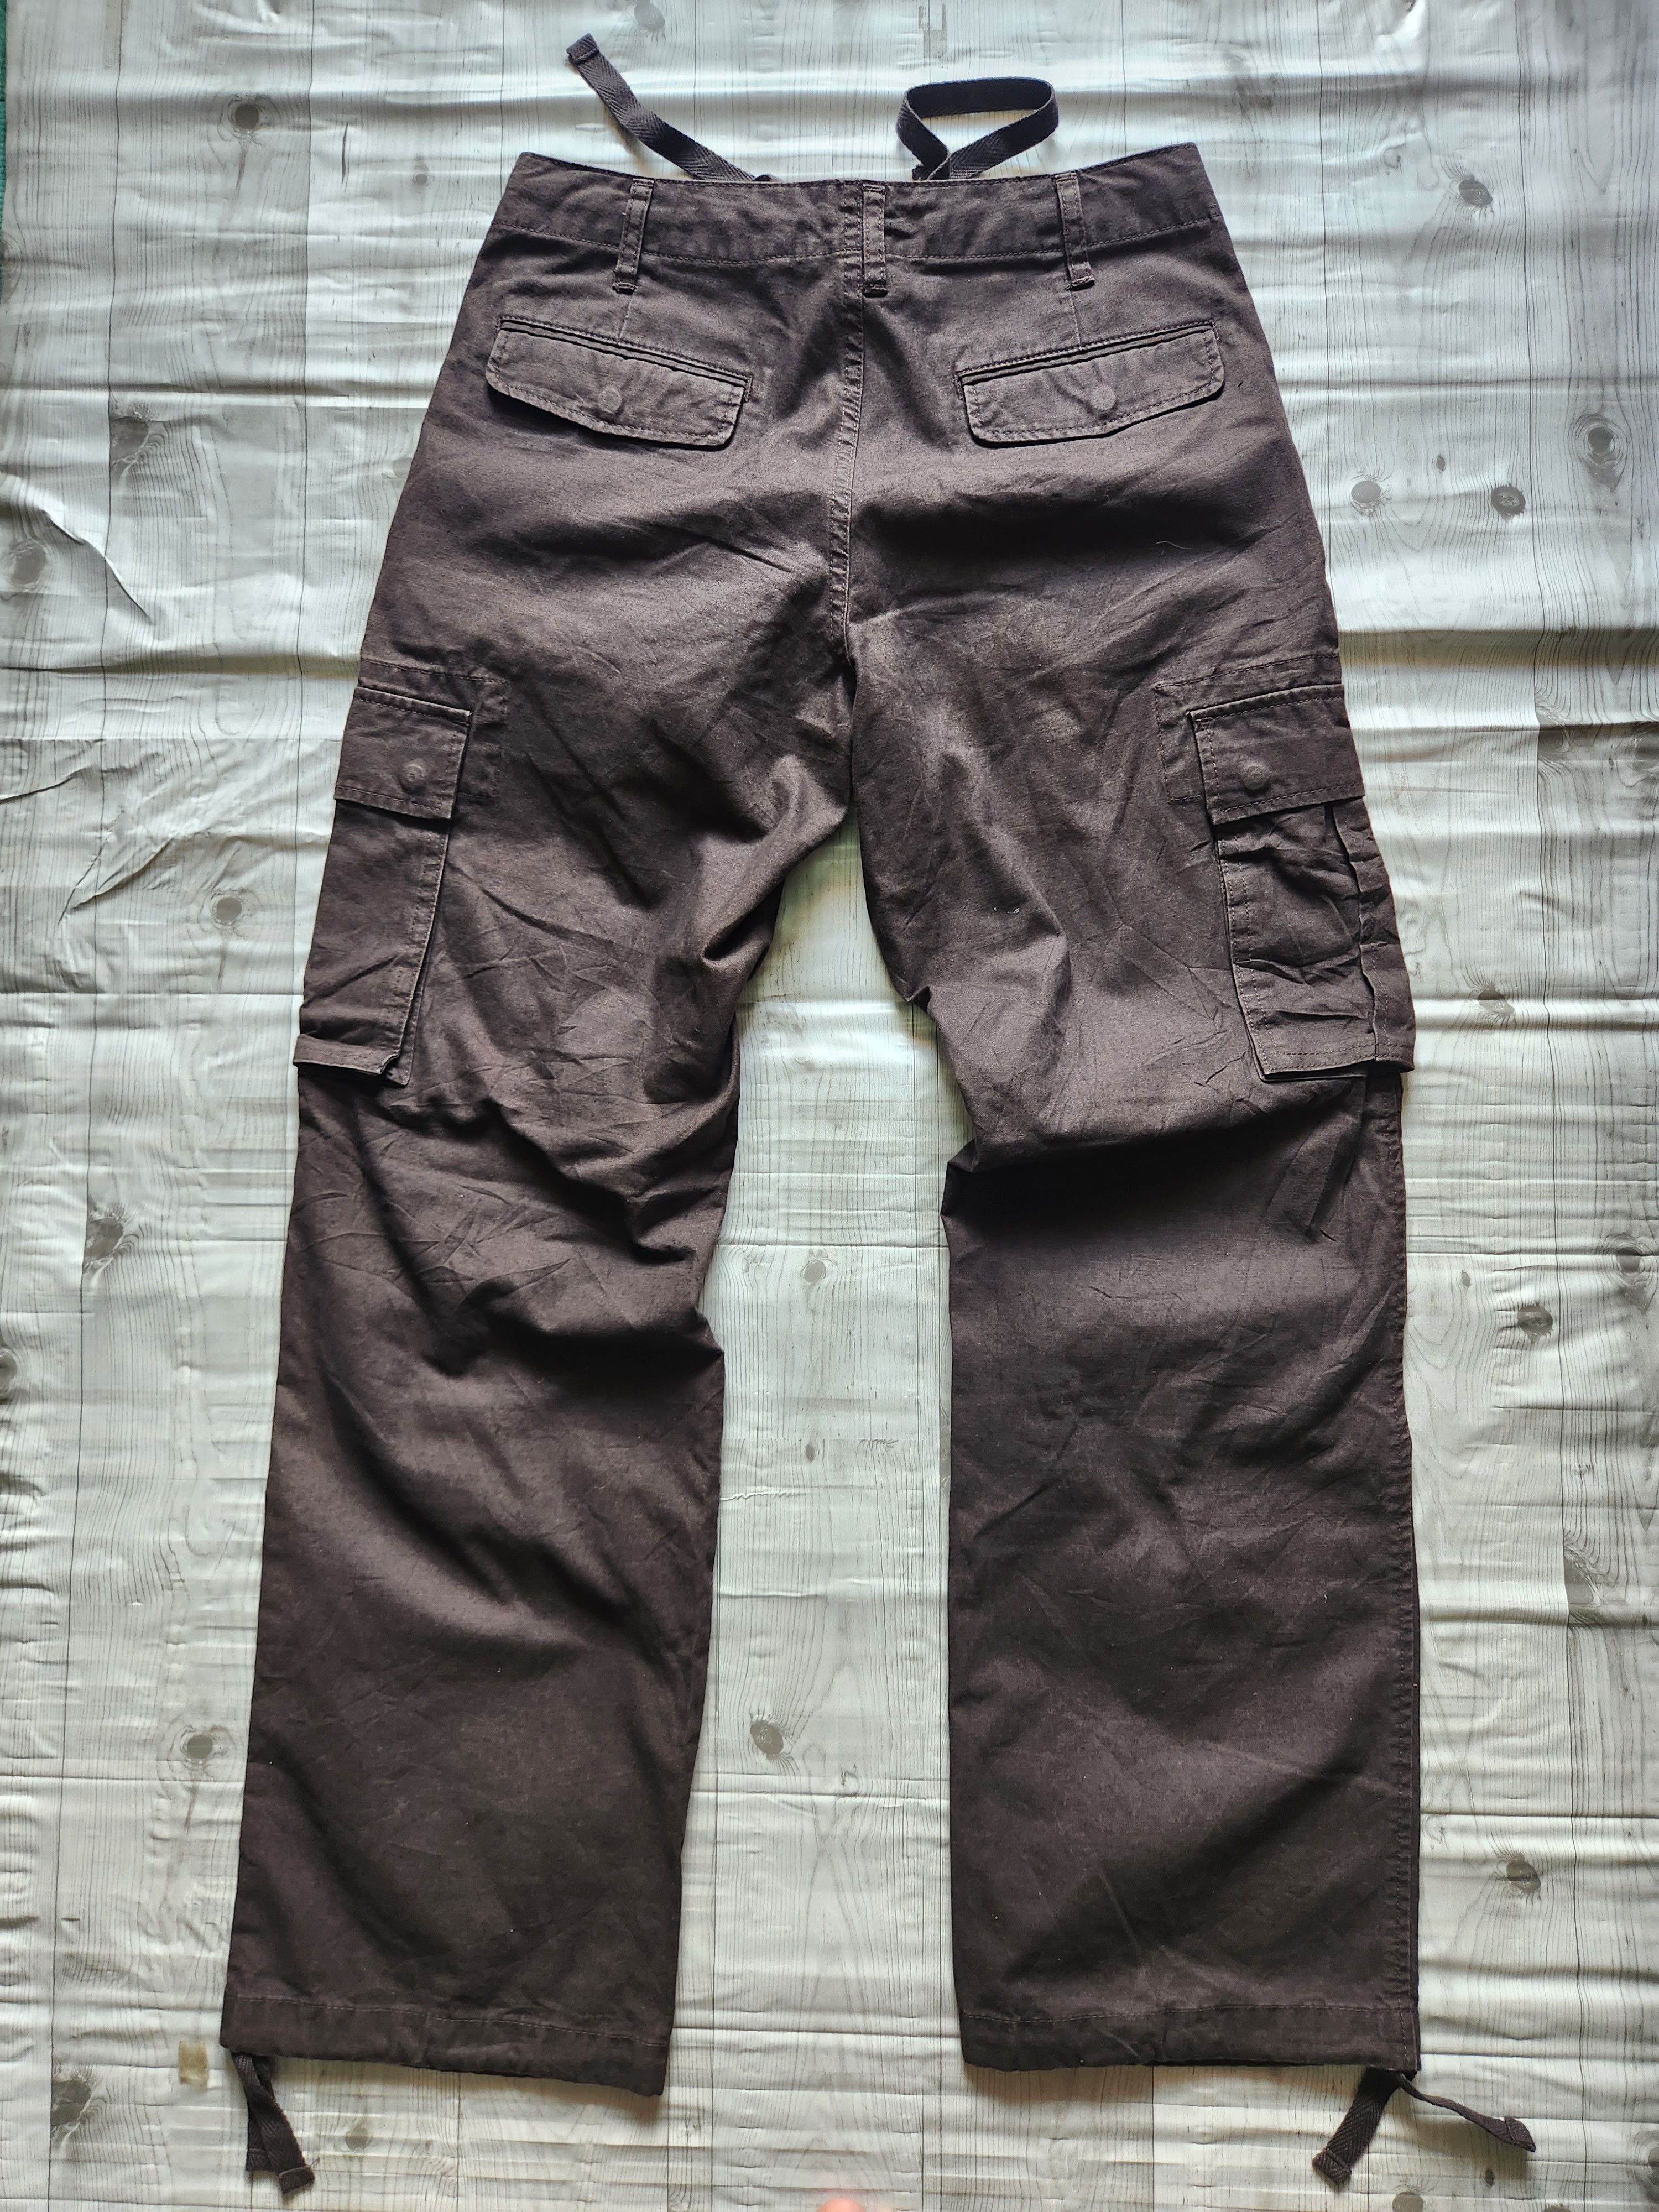 Uniqlo Tactical Pants Cargo Pockets - 2